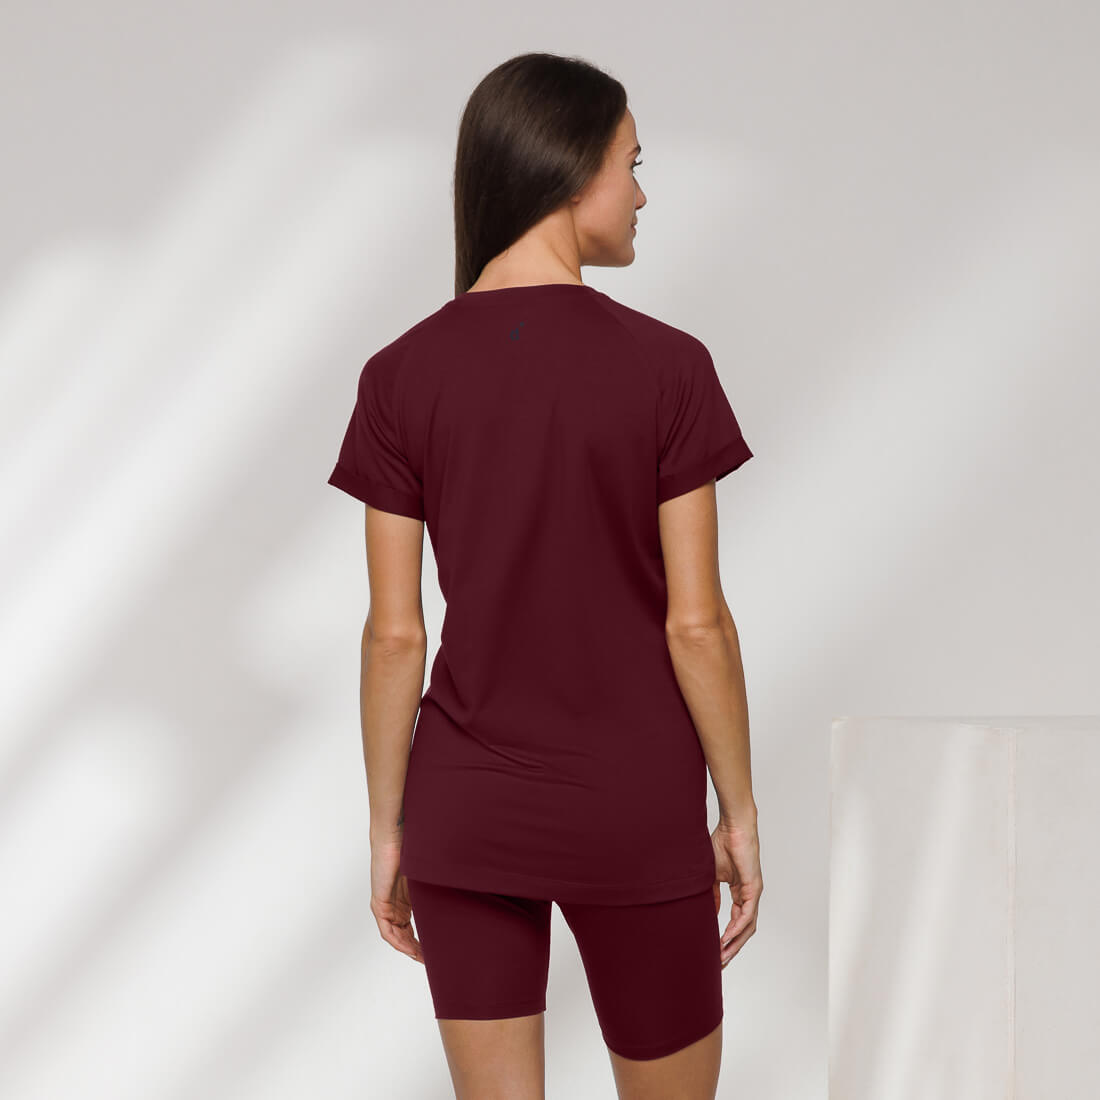 Muscle recovery sleep t-shirt women || Burgundy